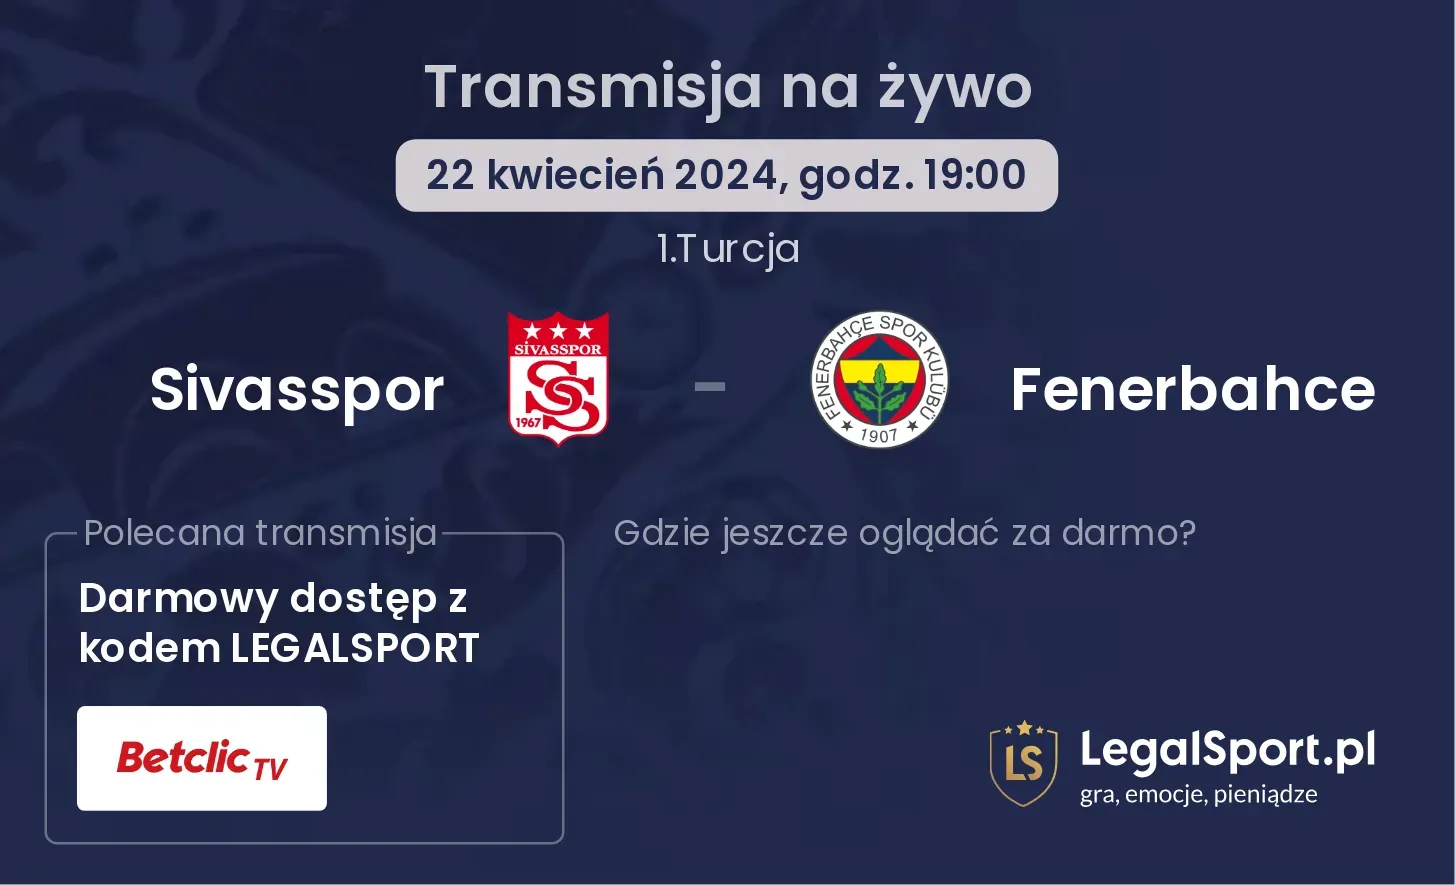 Sivasspor - Fenerbahce transmisja na żywo